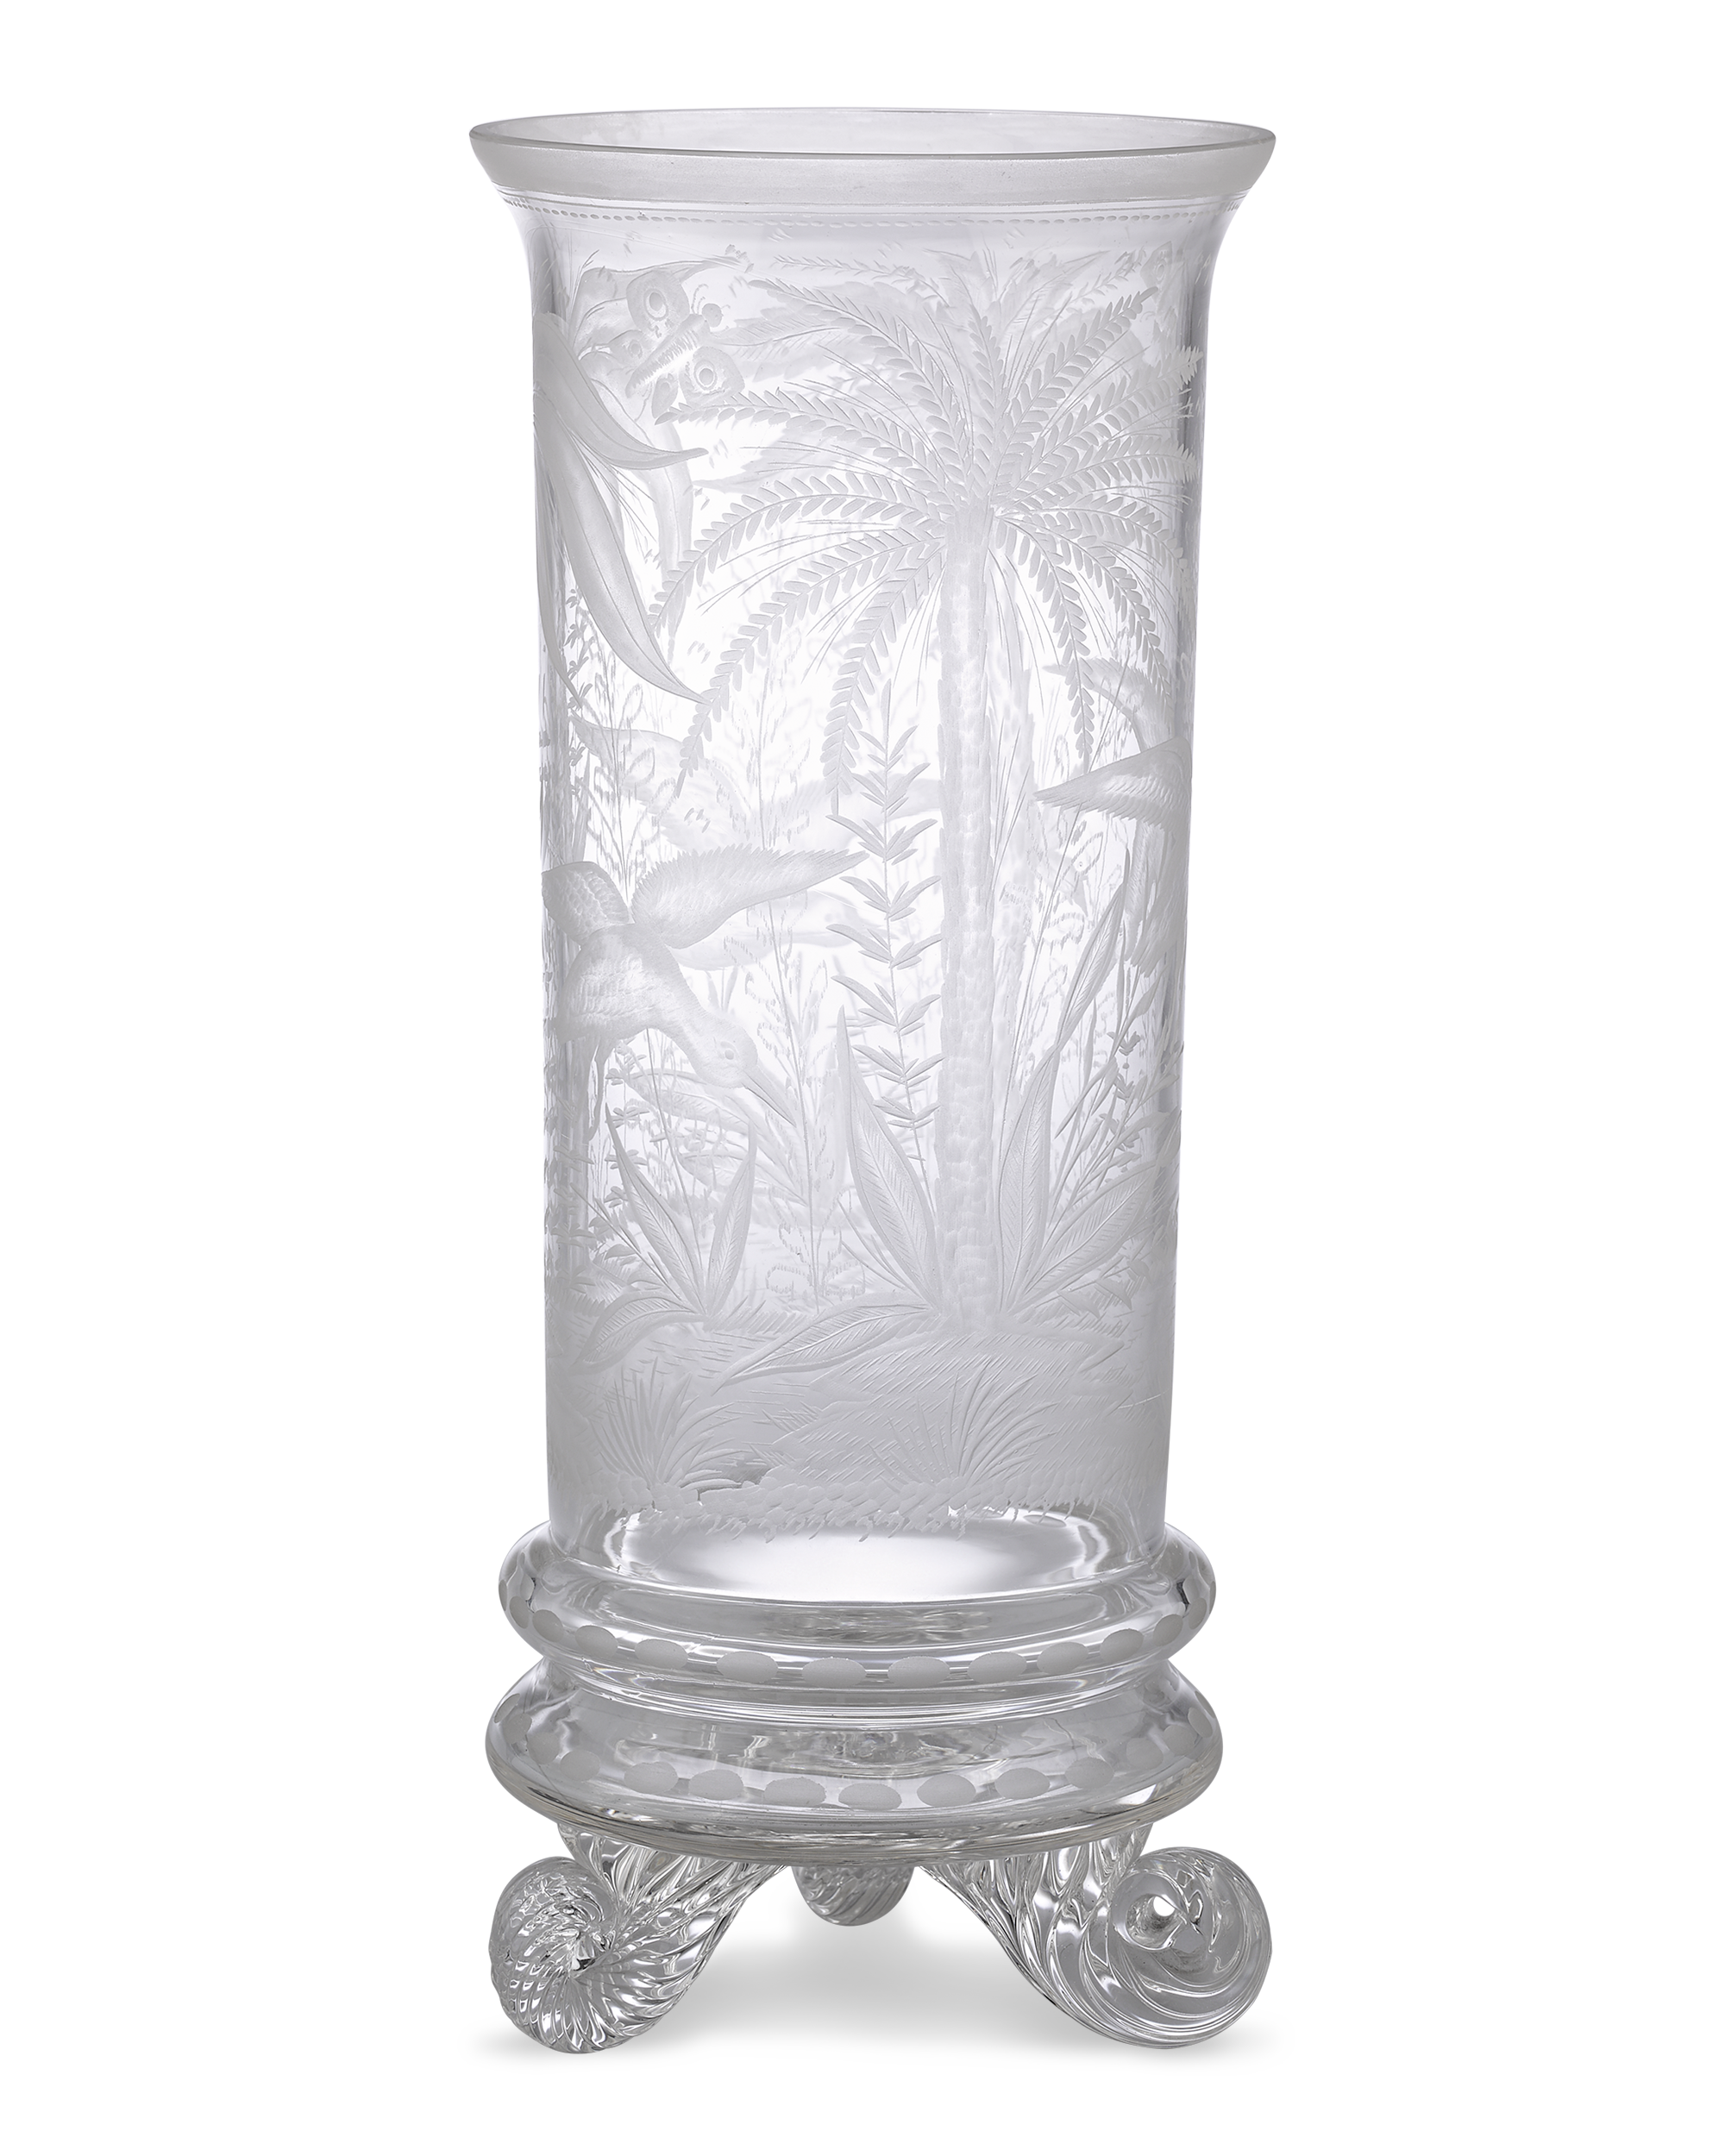 Chinoiserie Engraved Glass Vase by Stevens & Williams